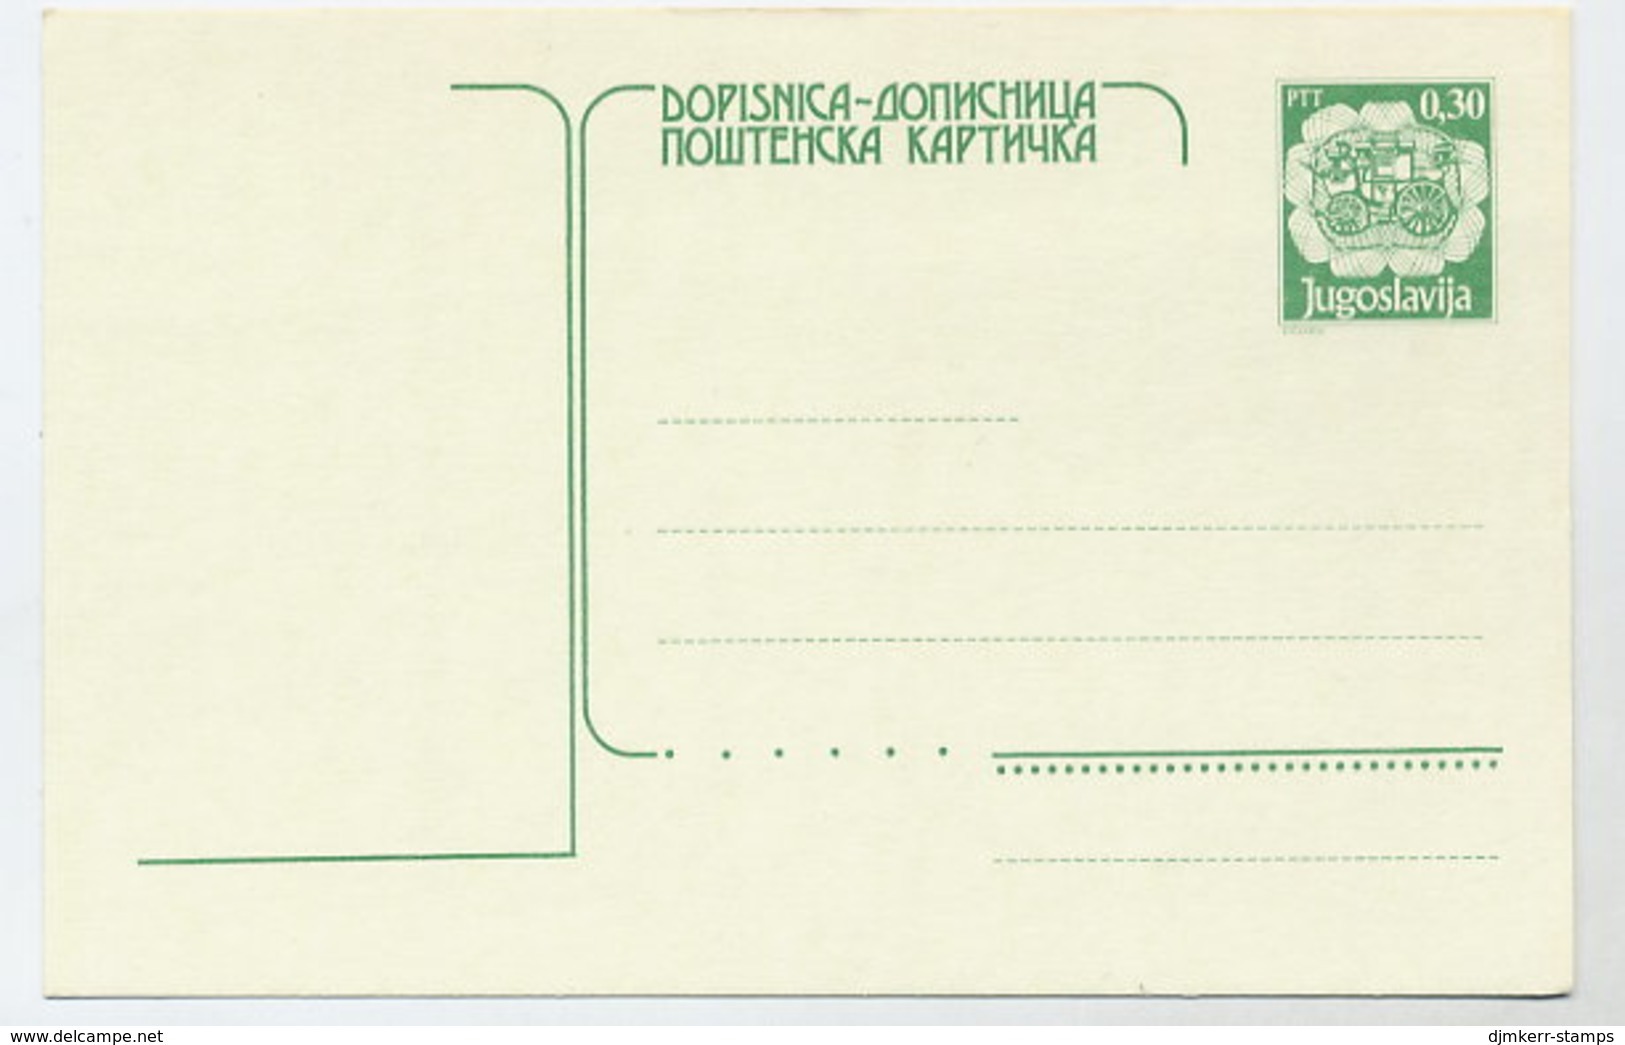 YUGOSLAVIA 1990 Postal Coach 0.30 D. Postcard, Unused.  Michel P202 - Postal Stationery